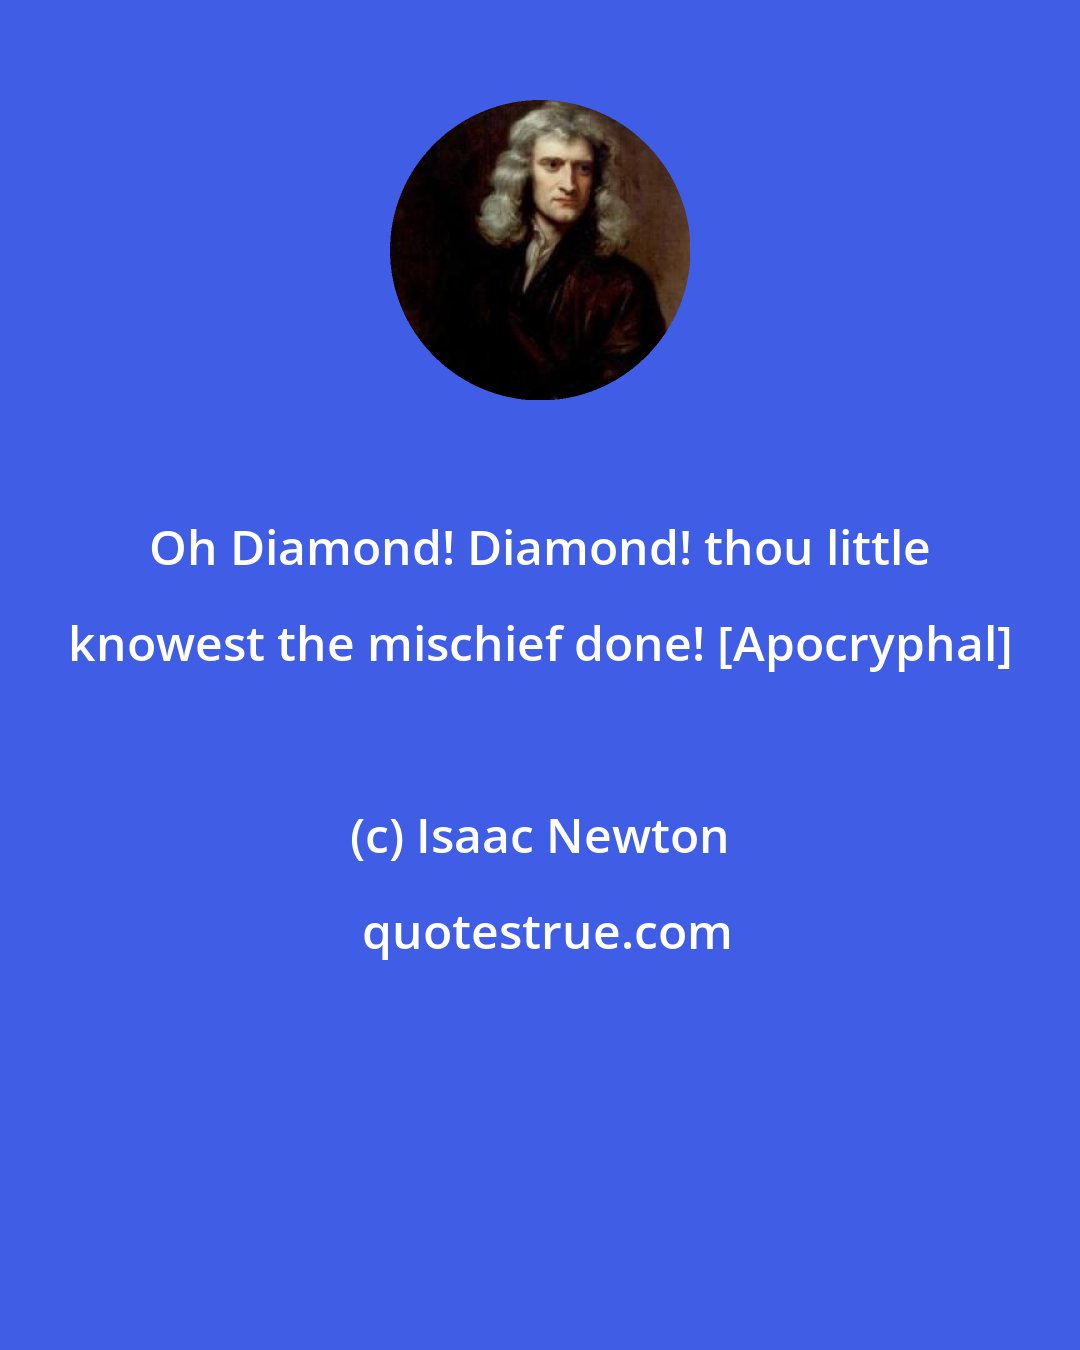 Isaac Newton: Oh Diamond! Diamond! thou little knowest the mischief done! [Apocryphal]